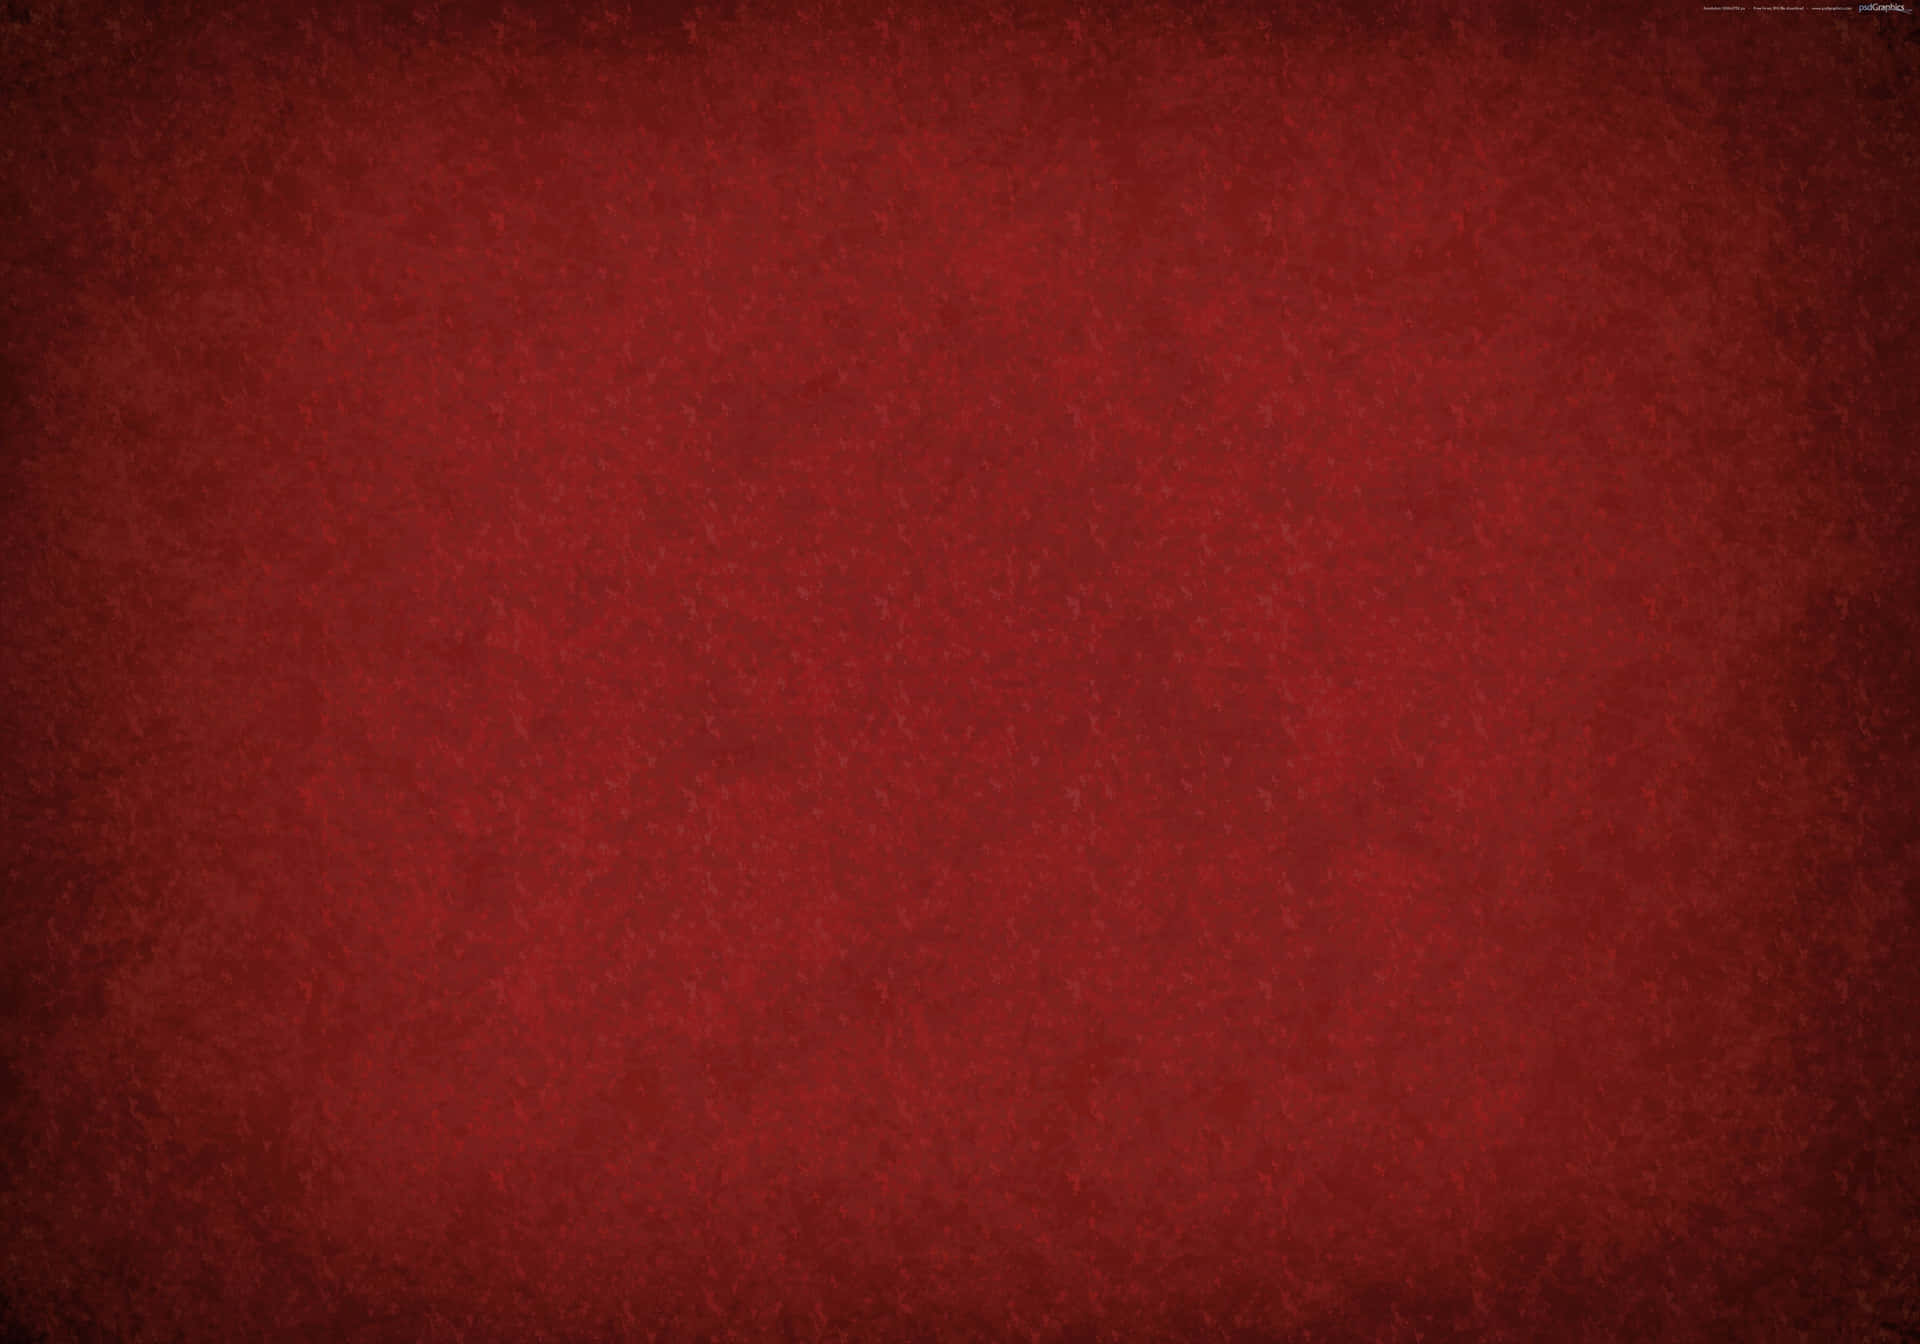 Intense Red Grunge Background Wallpaper